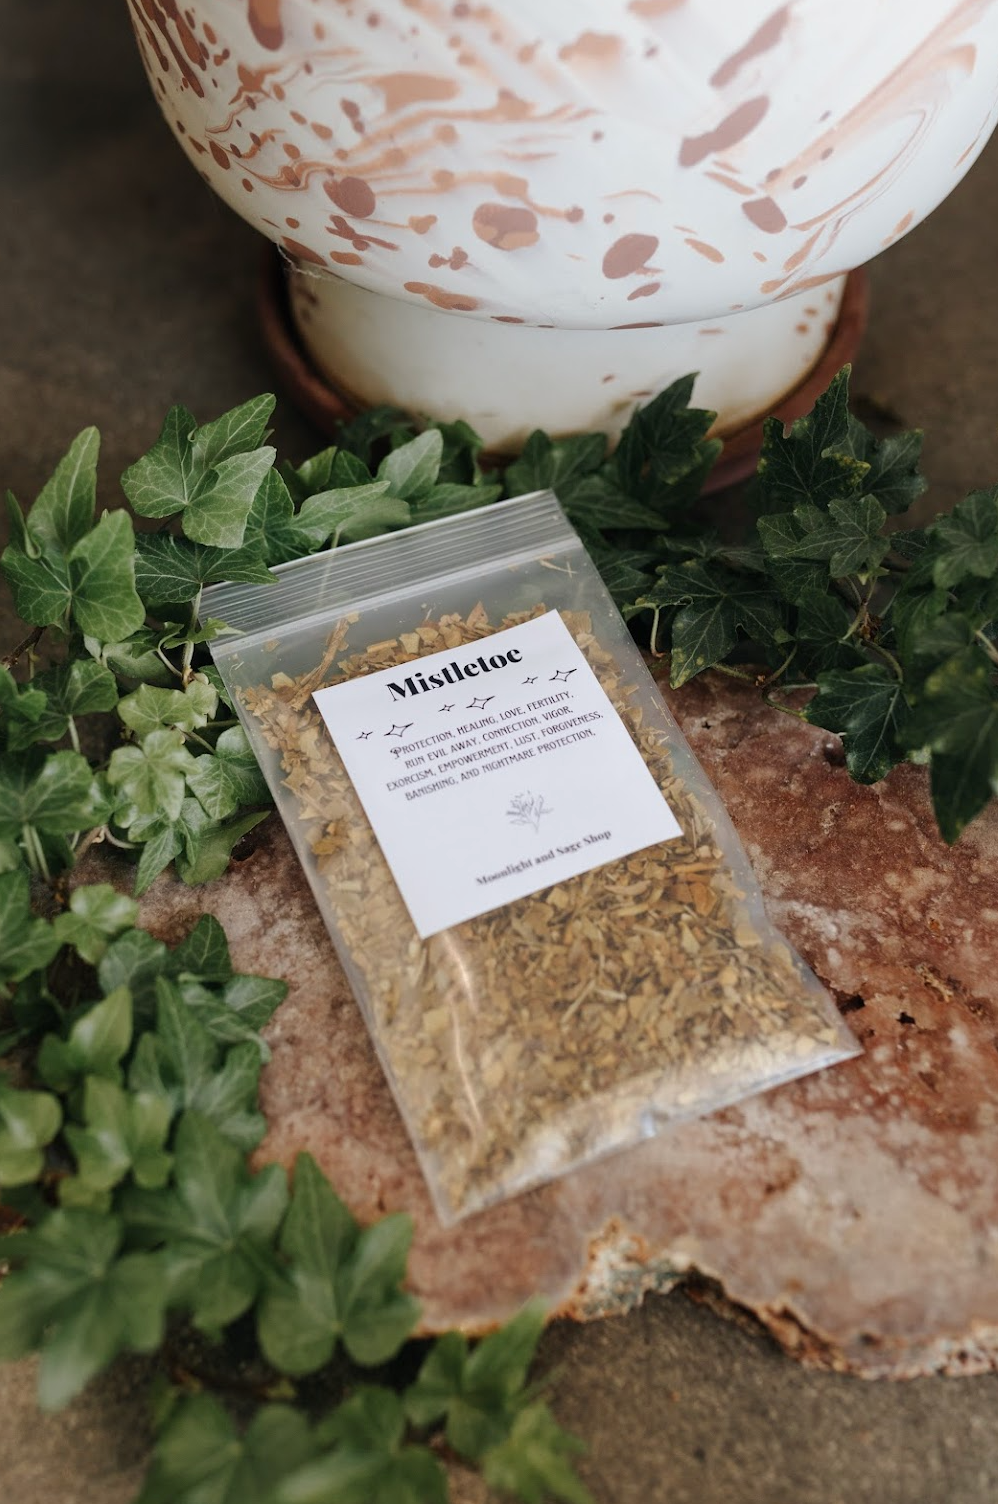 Mistletoe Herb (Protection, Healing, Connection, Lust, Forgiveness, Banishing)